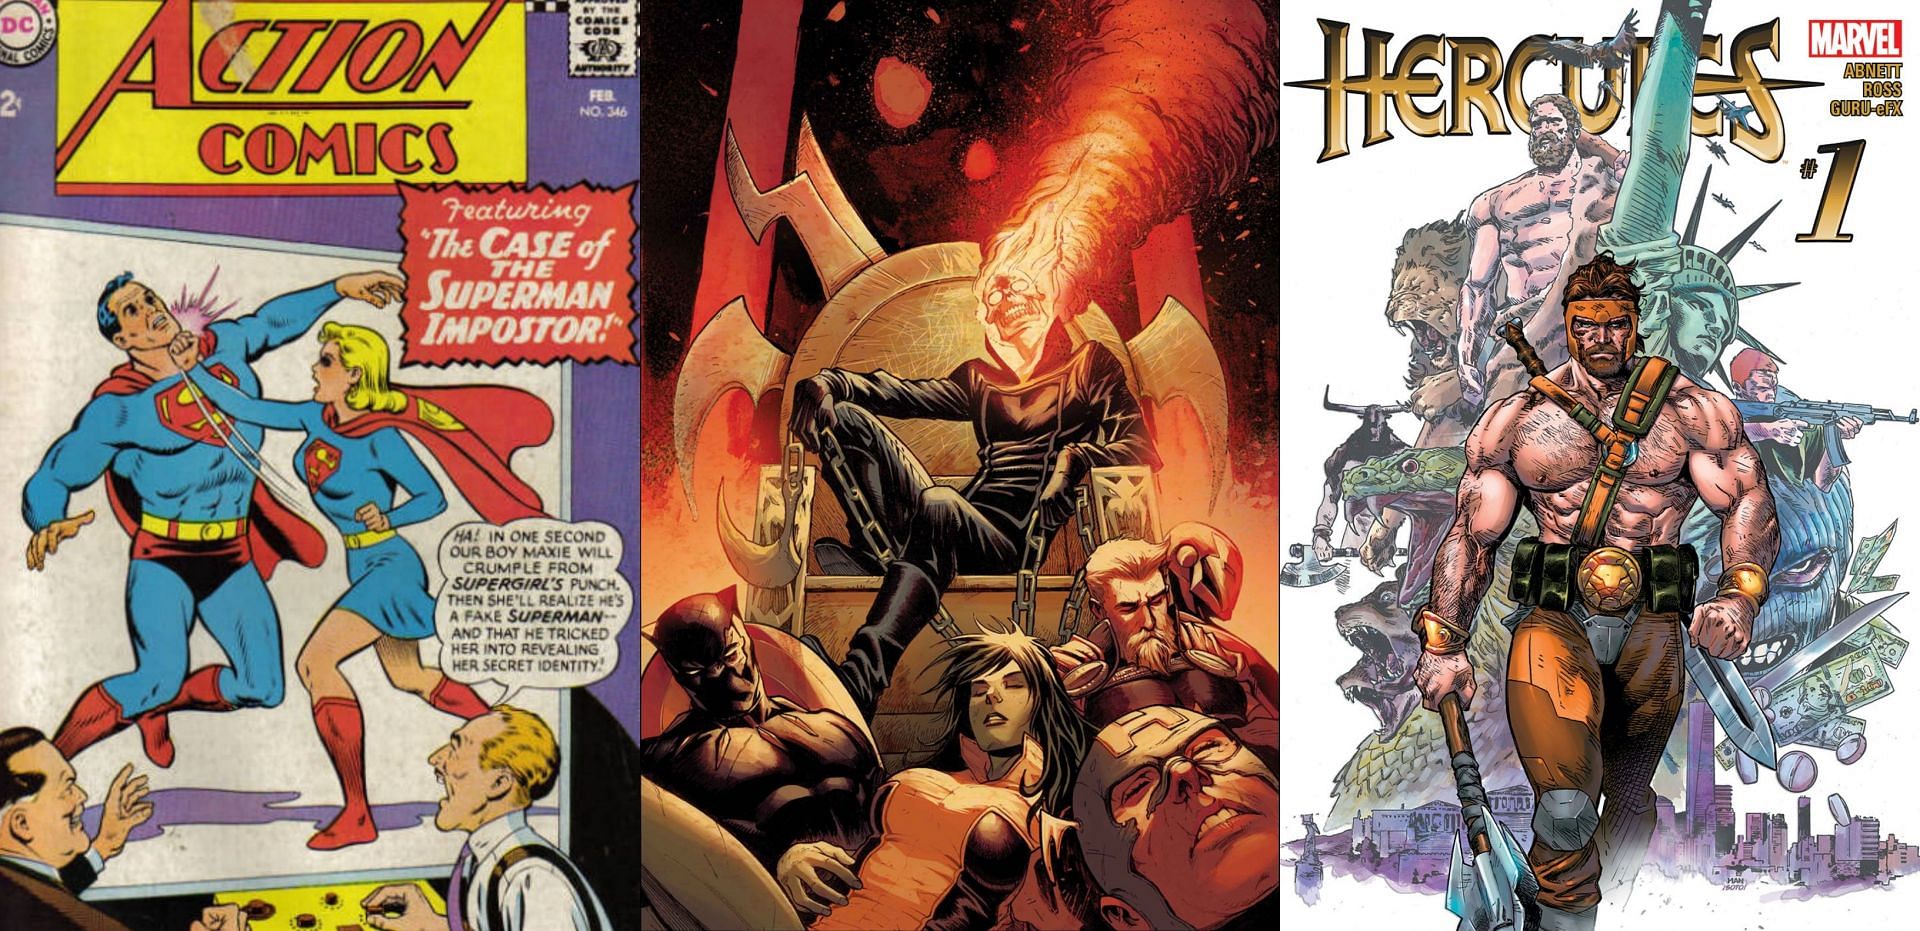 Superman, Ghost Rider, and Hercules (Image via DC Comics / Marvel Comics)